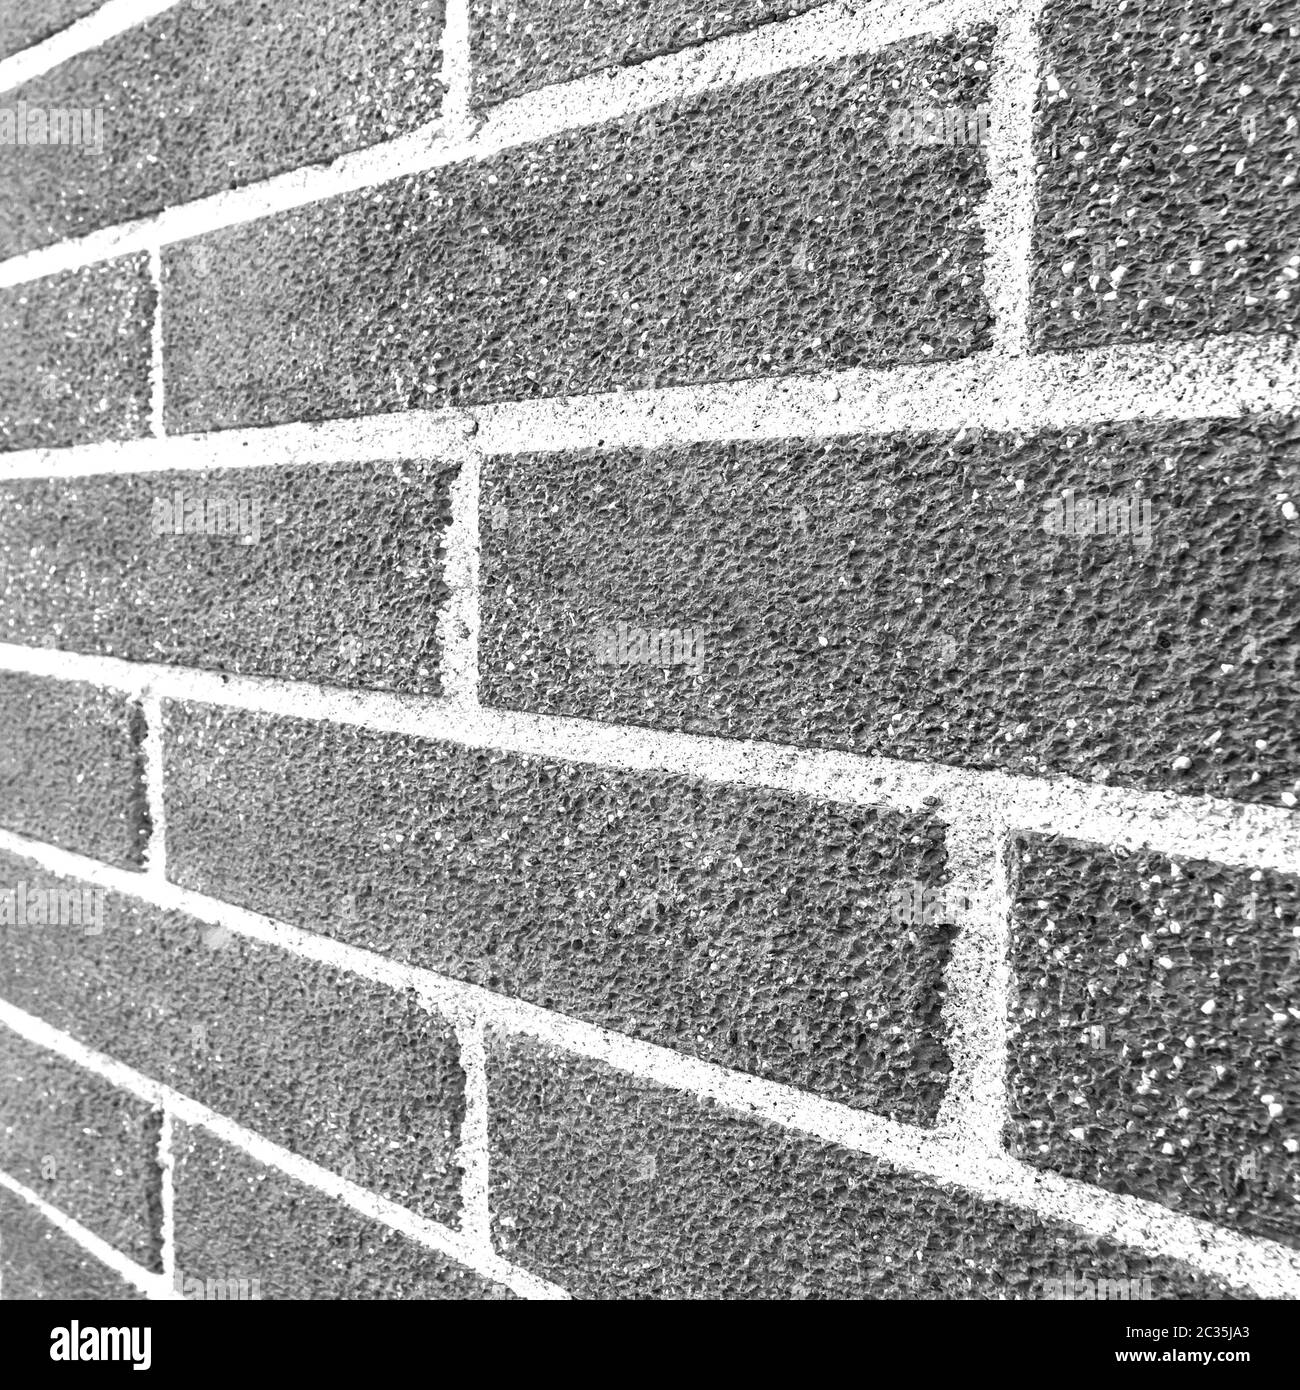 Brick Wall Side Angle Black and White Stock Photo